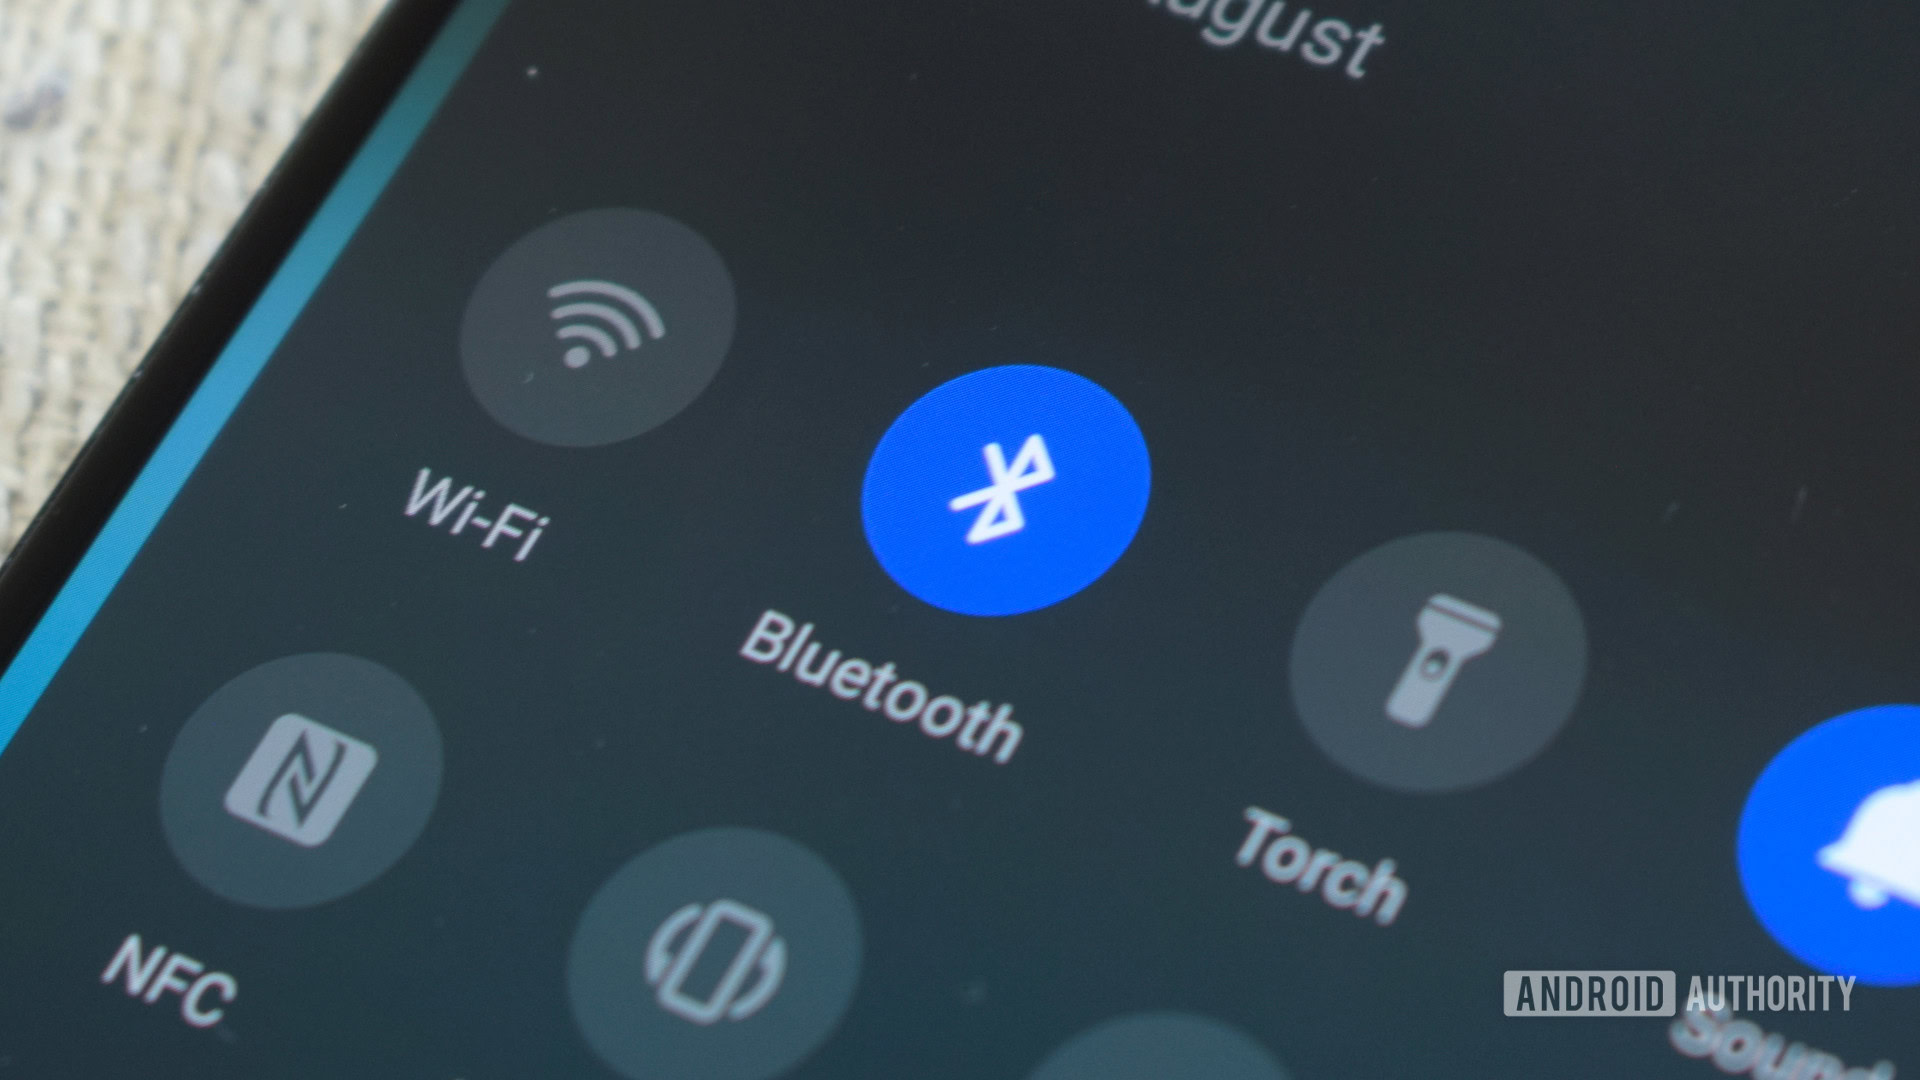 Bluetooth icon on the smartphone settings menu